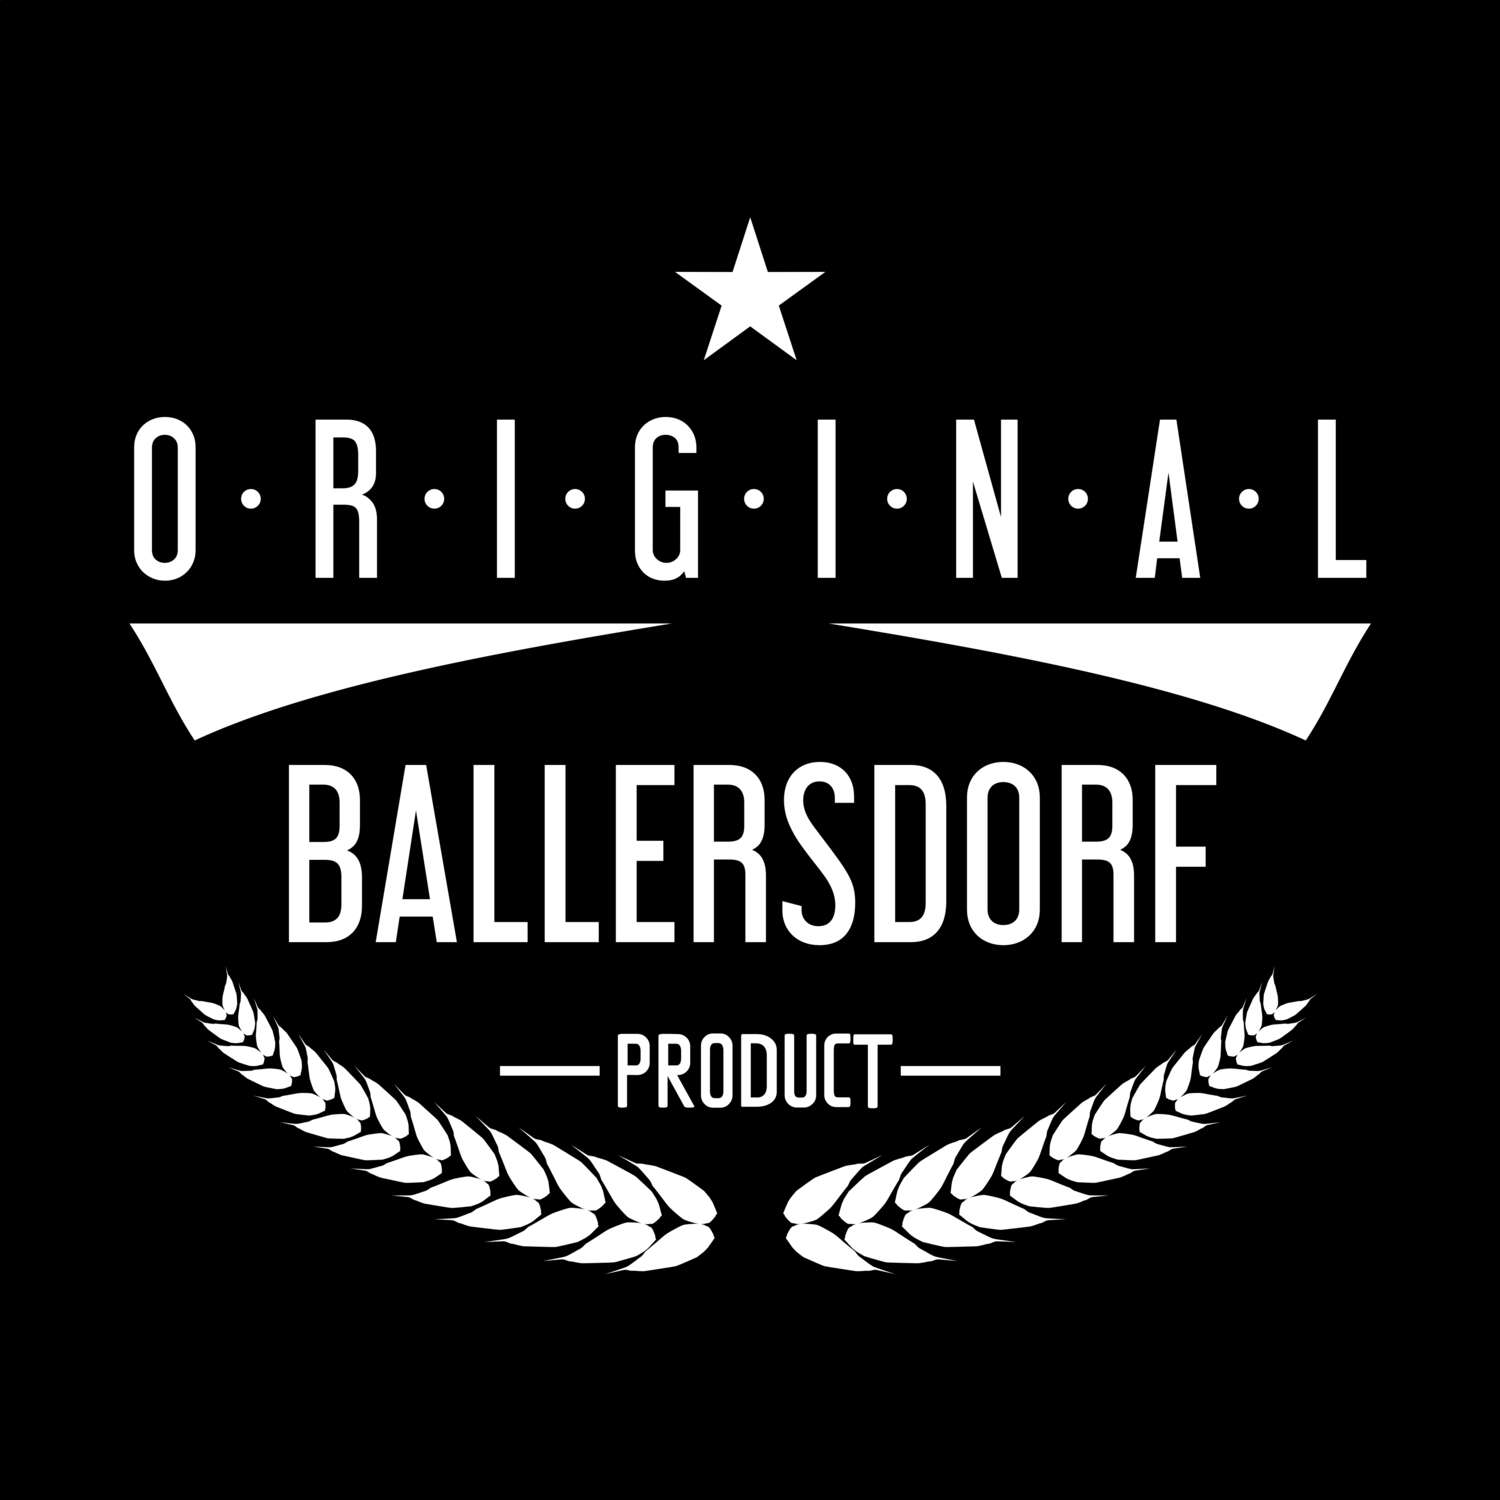 Ballersdorf T-Shirt »Original Product«